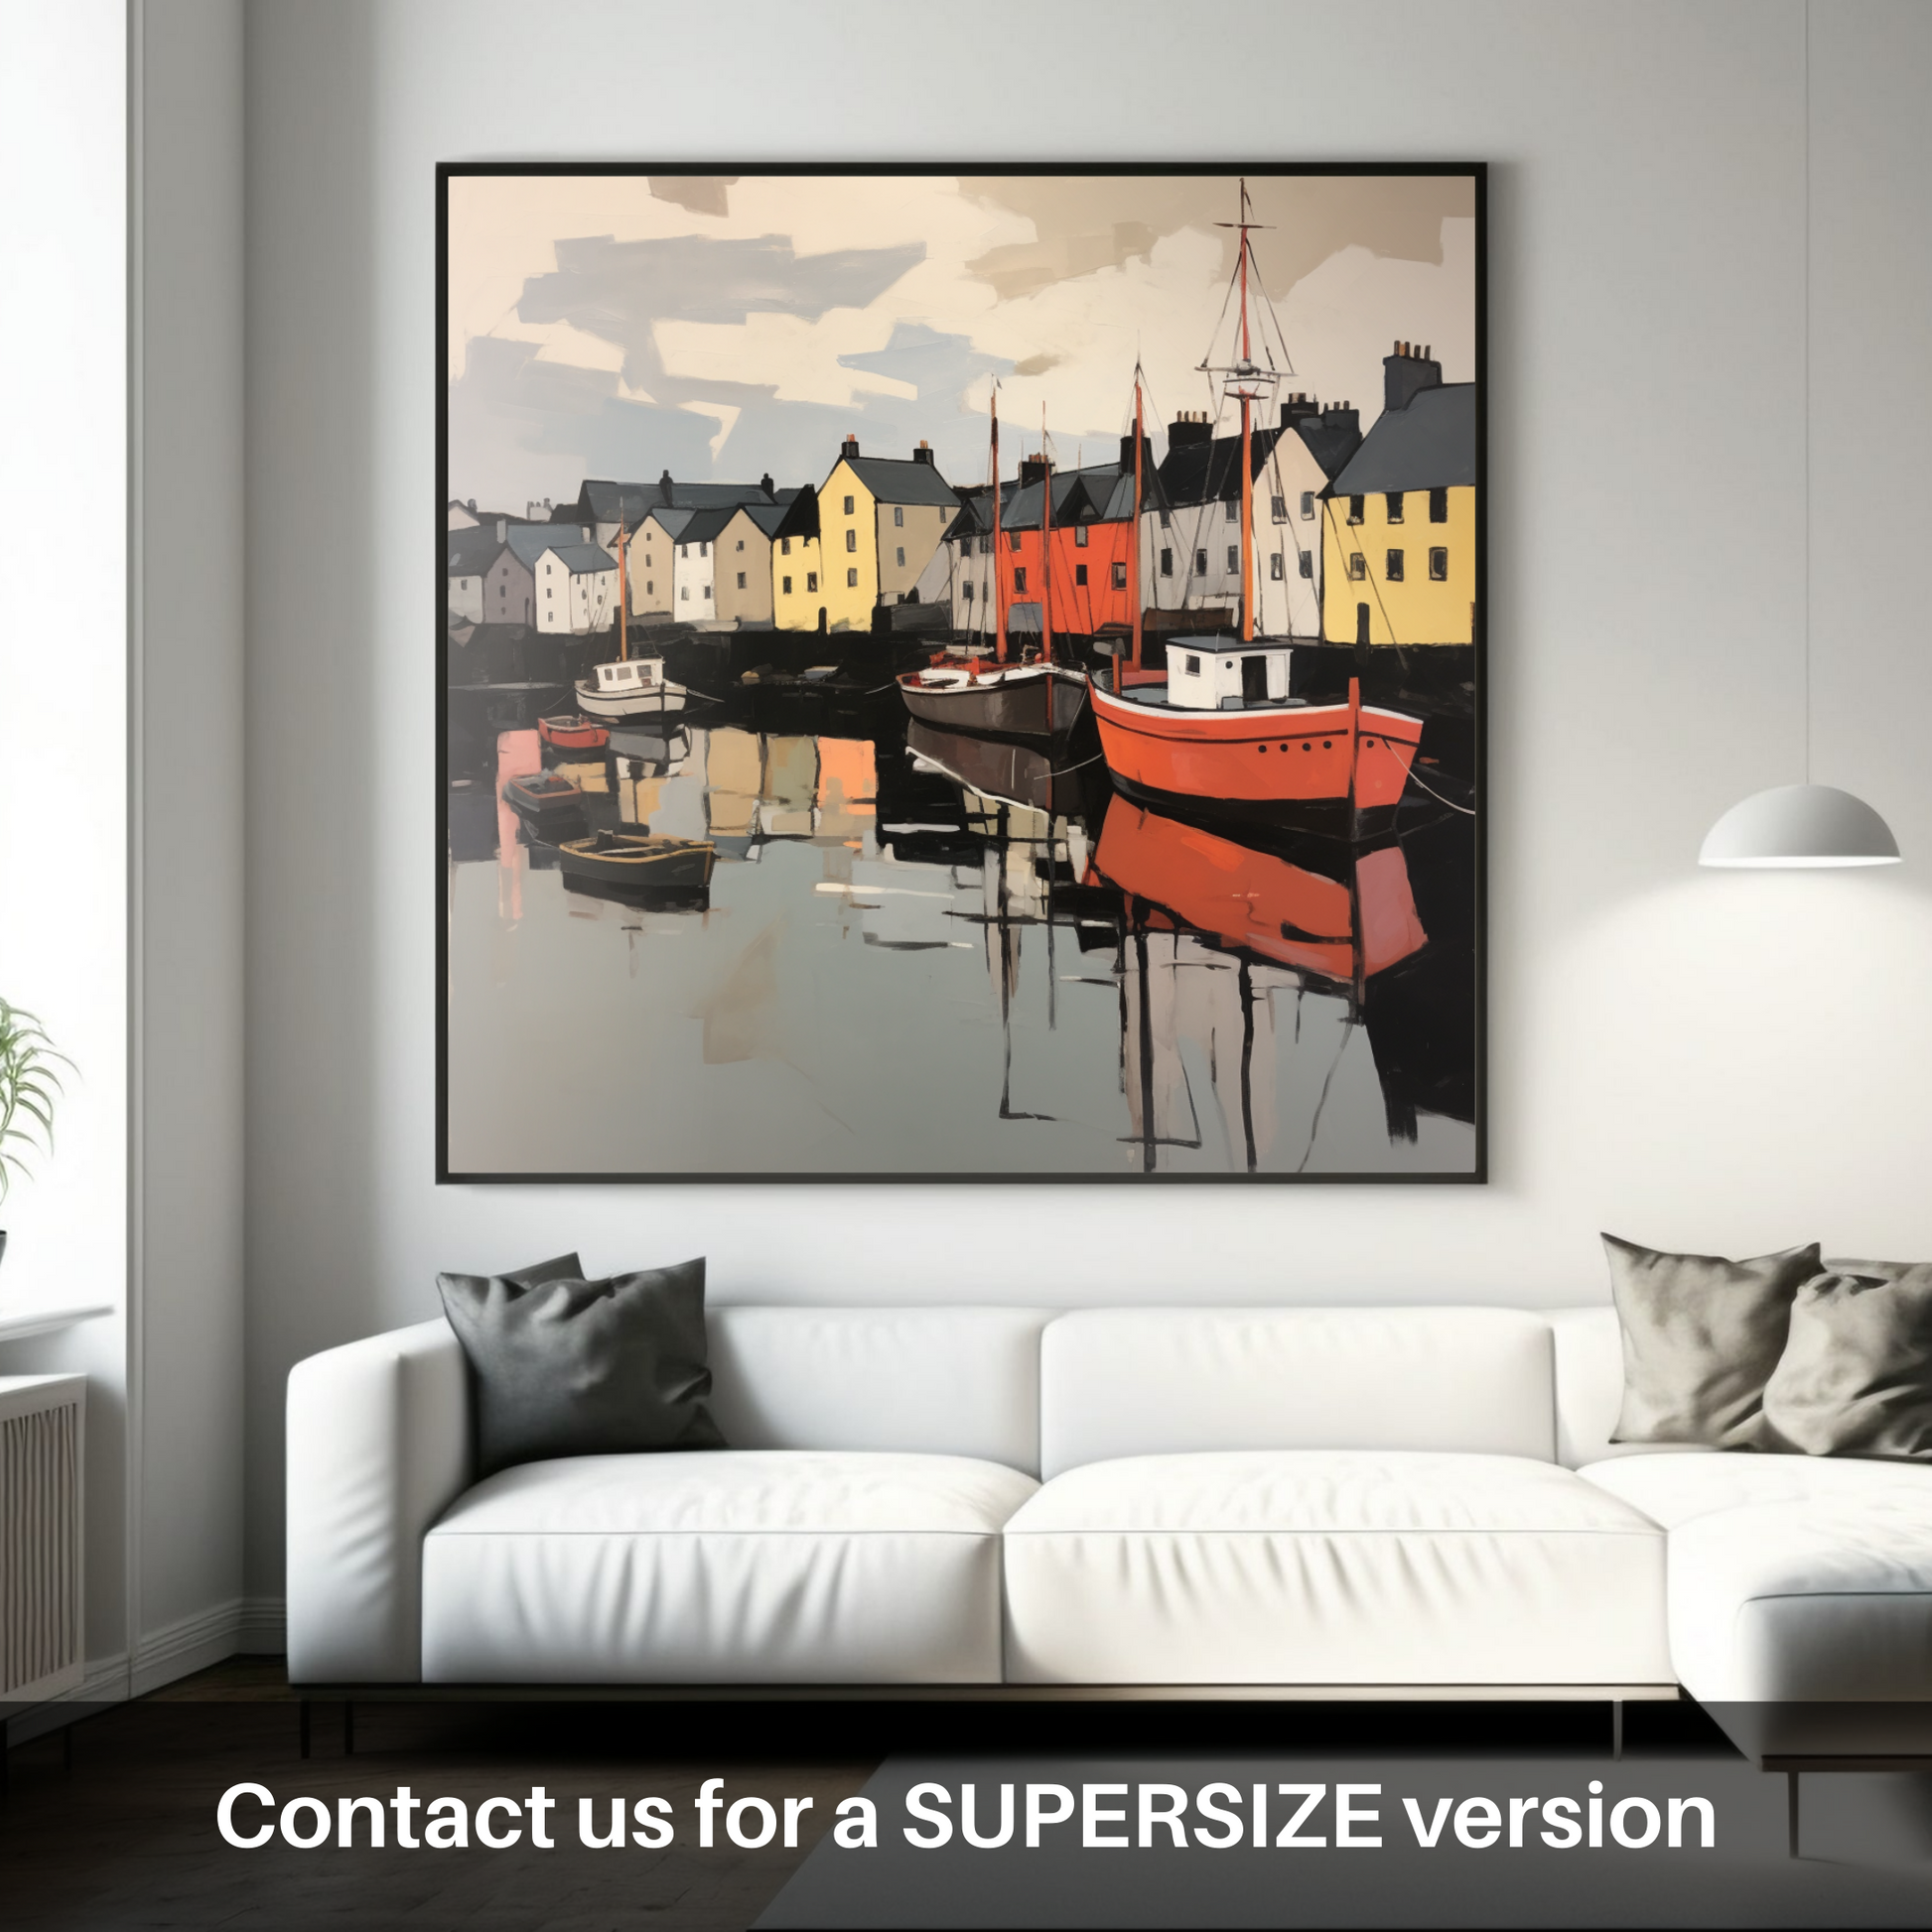 Huge supersize print of Stornoway Harbour